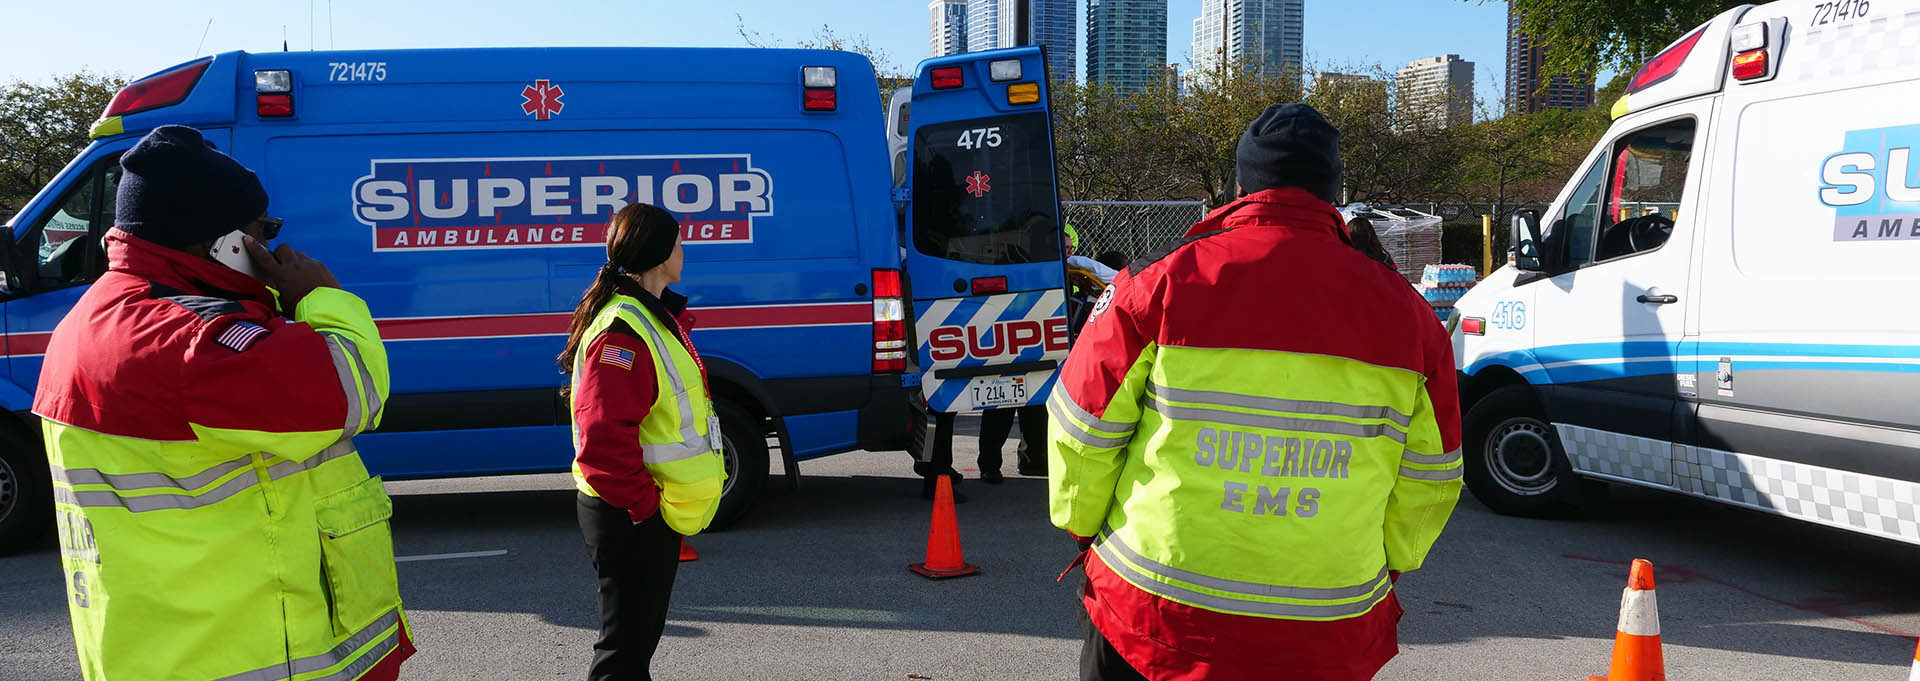 Superior Ambulance at the Chicago Marathon 